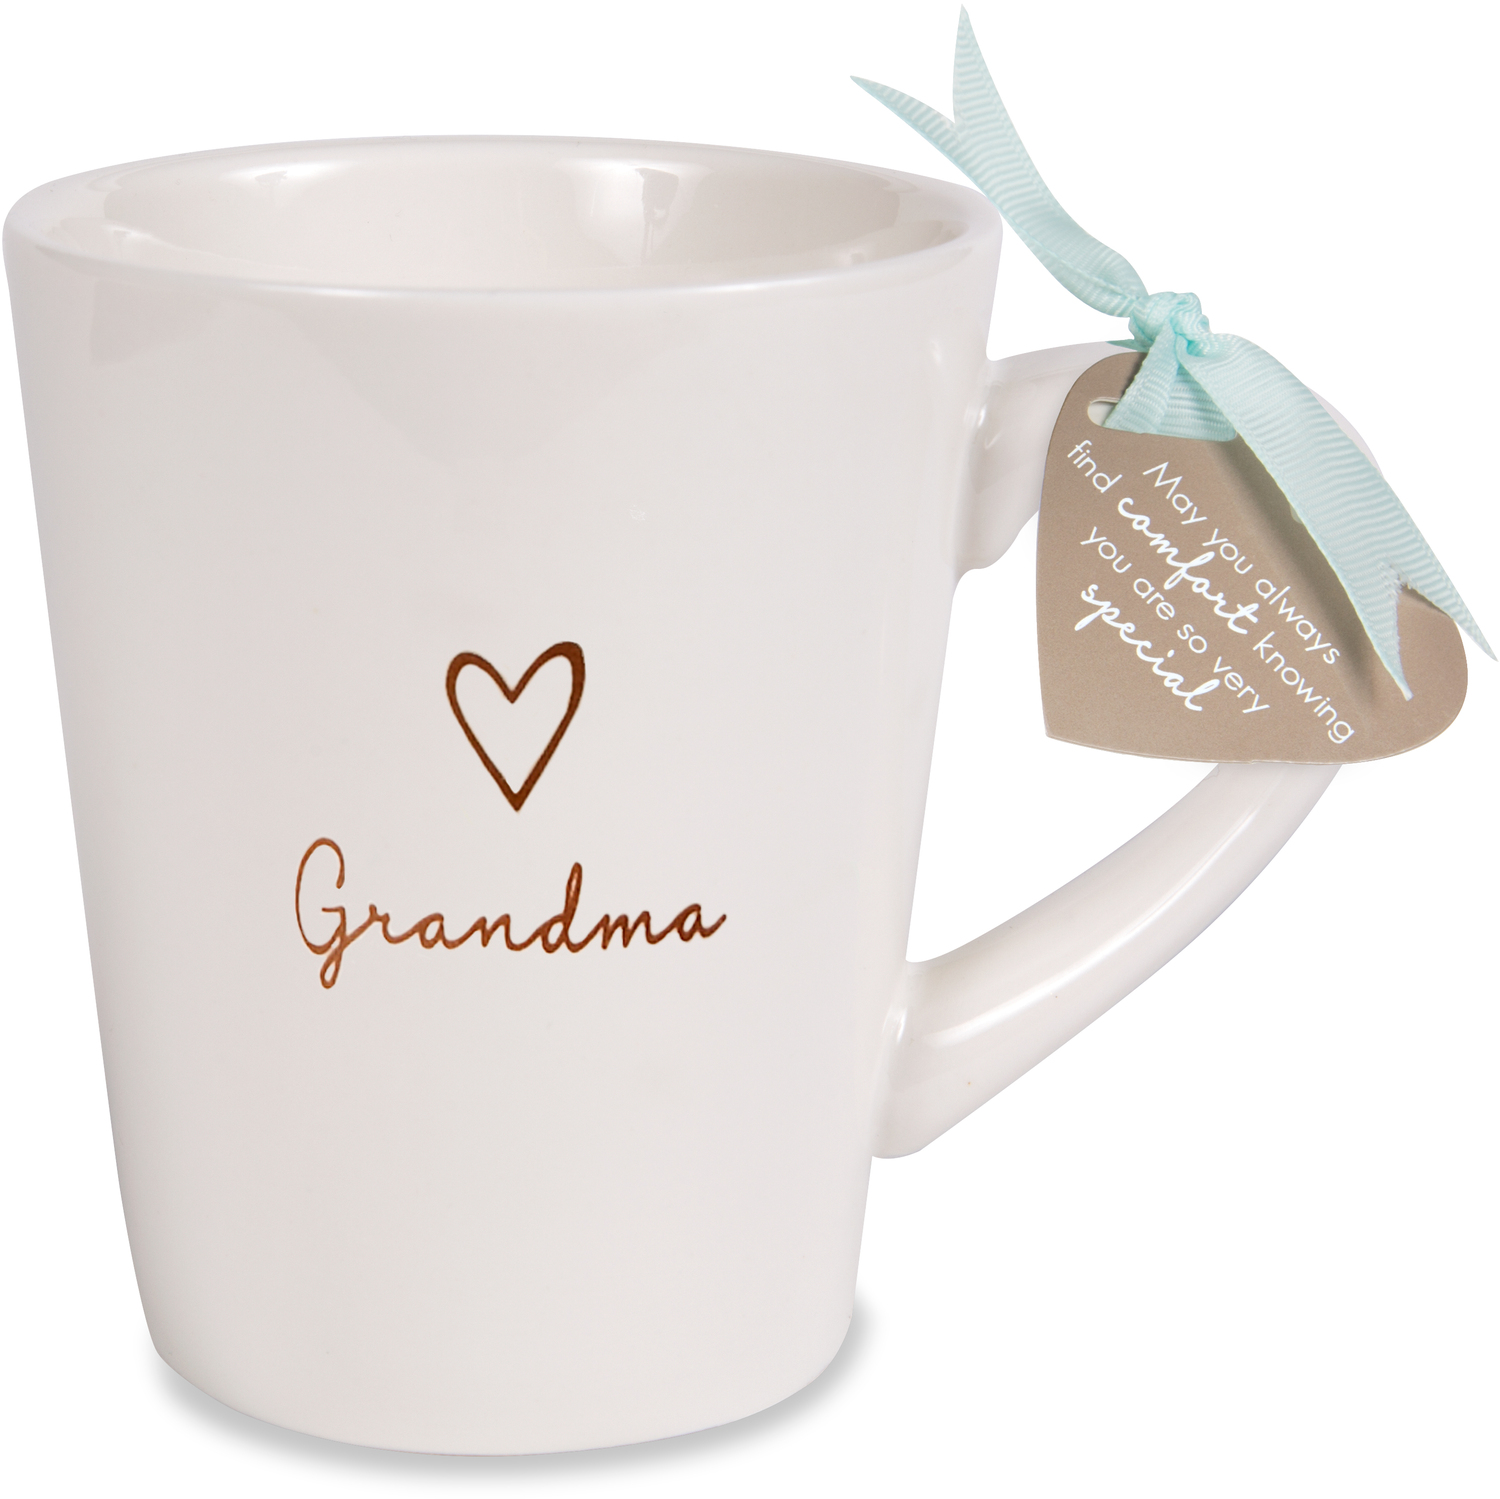 Grandma by Comfort Collection - Grandma - 15 oz Cup